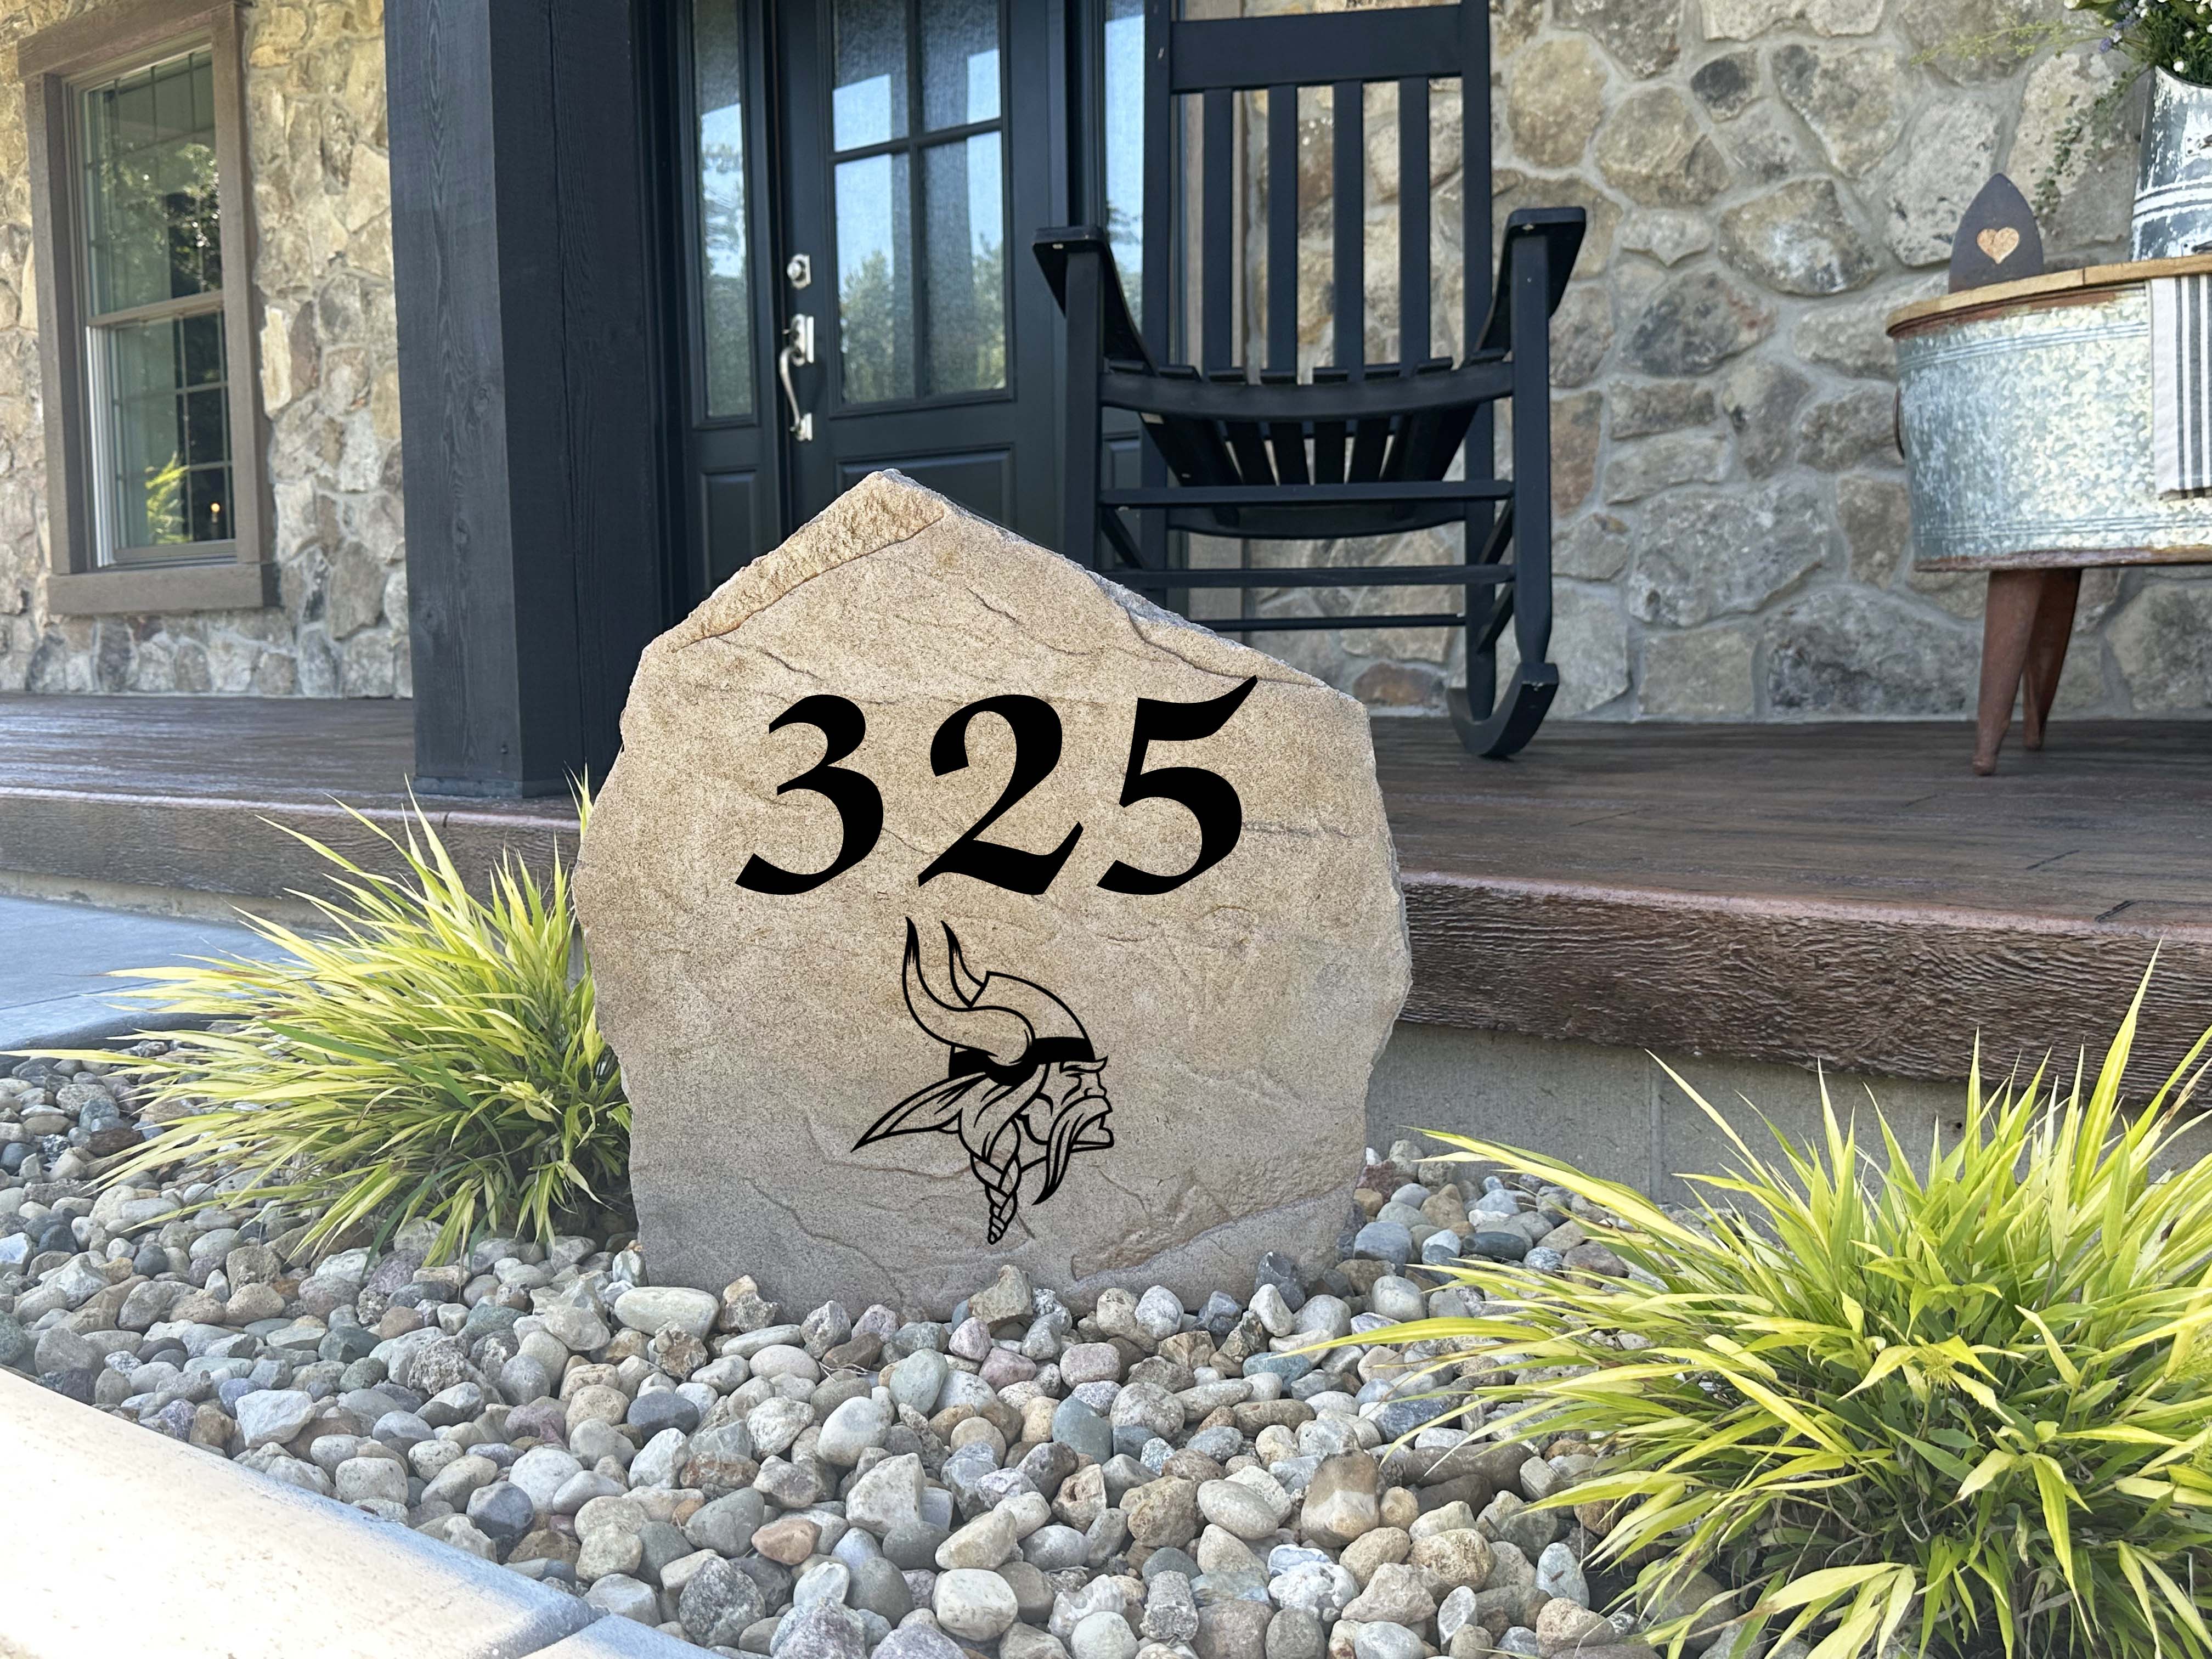 Minnesota Vikings Design-A-Stone Landscape Art Address Stone